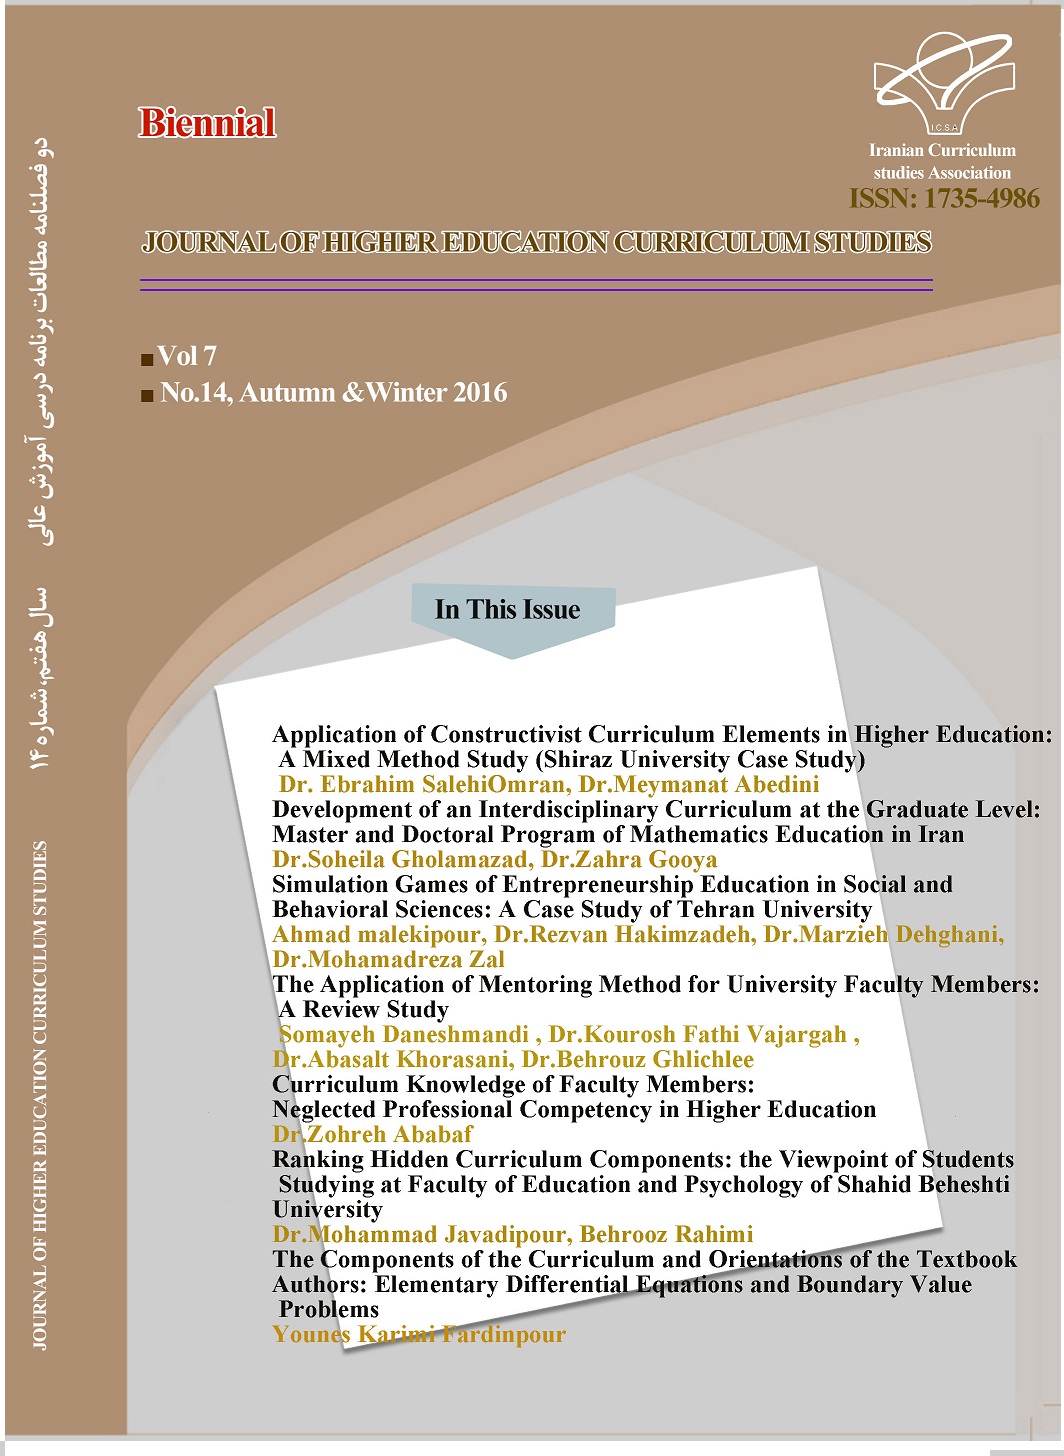 Journal of higher education curriculum studies